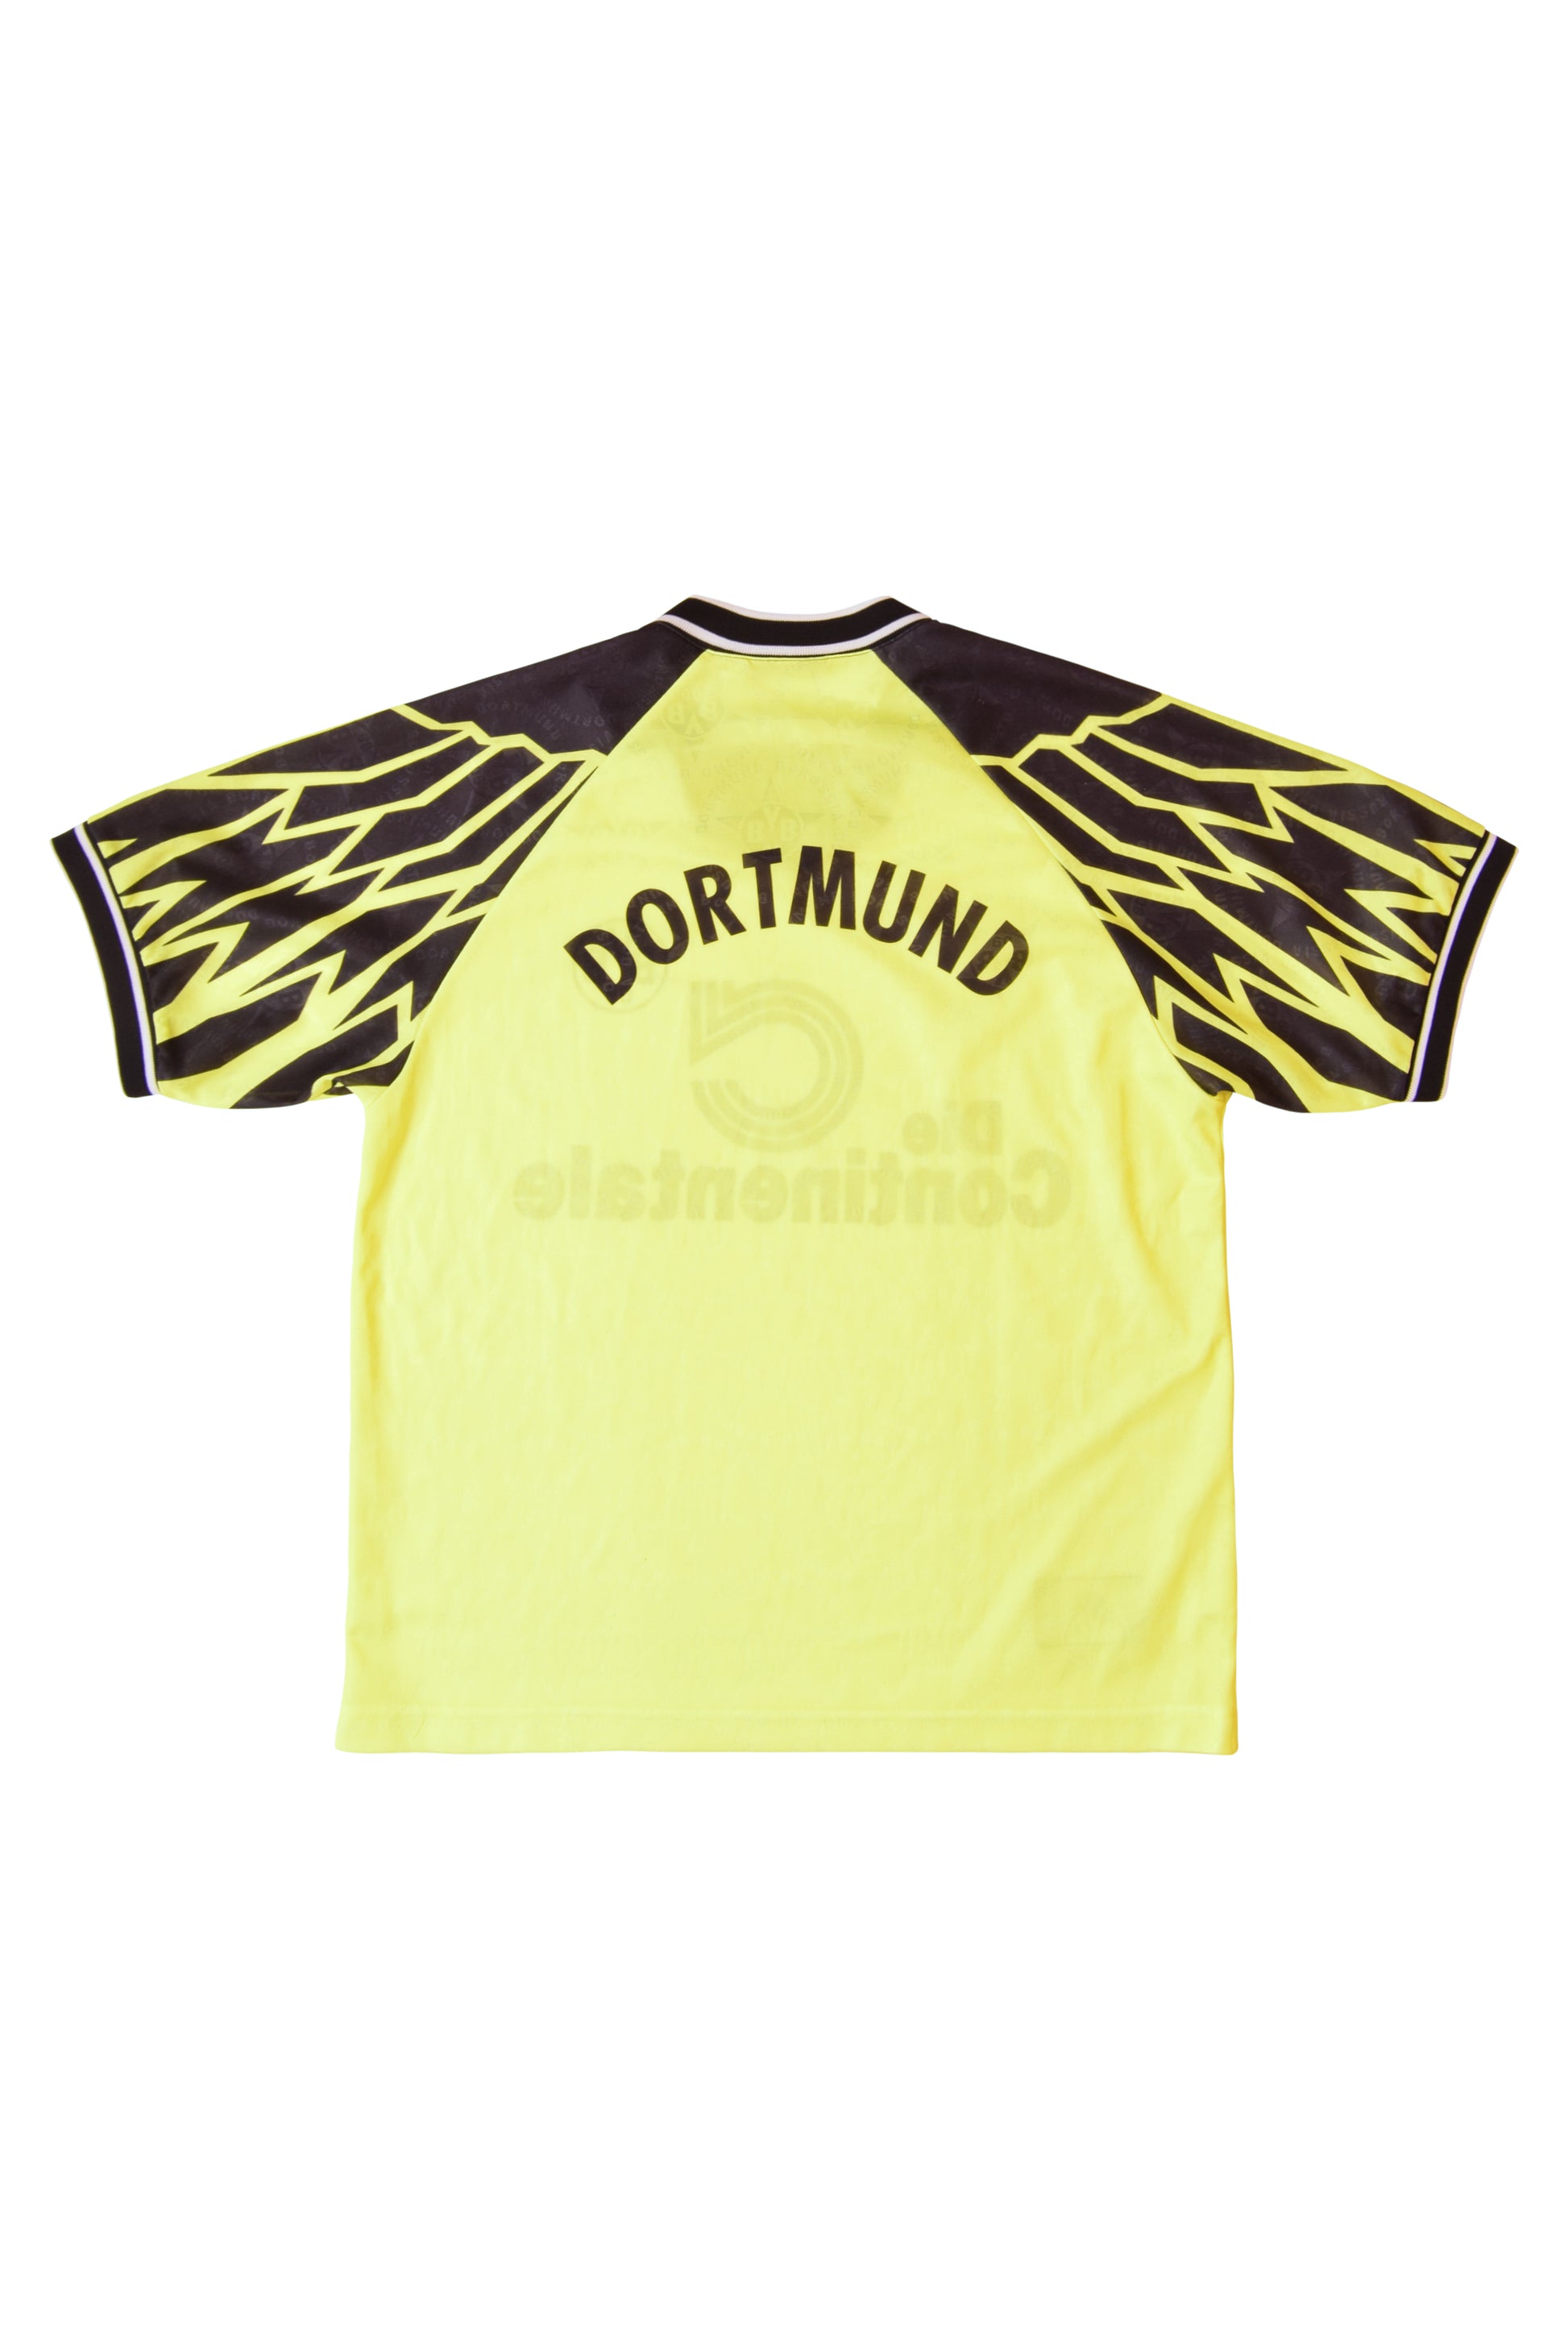 Vintage Nike Premier Football Shirt BVB Borussia Dortmund Home Neon 1994-1995 Eagle Wings Template Size M